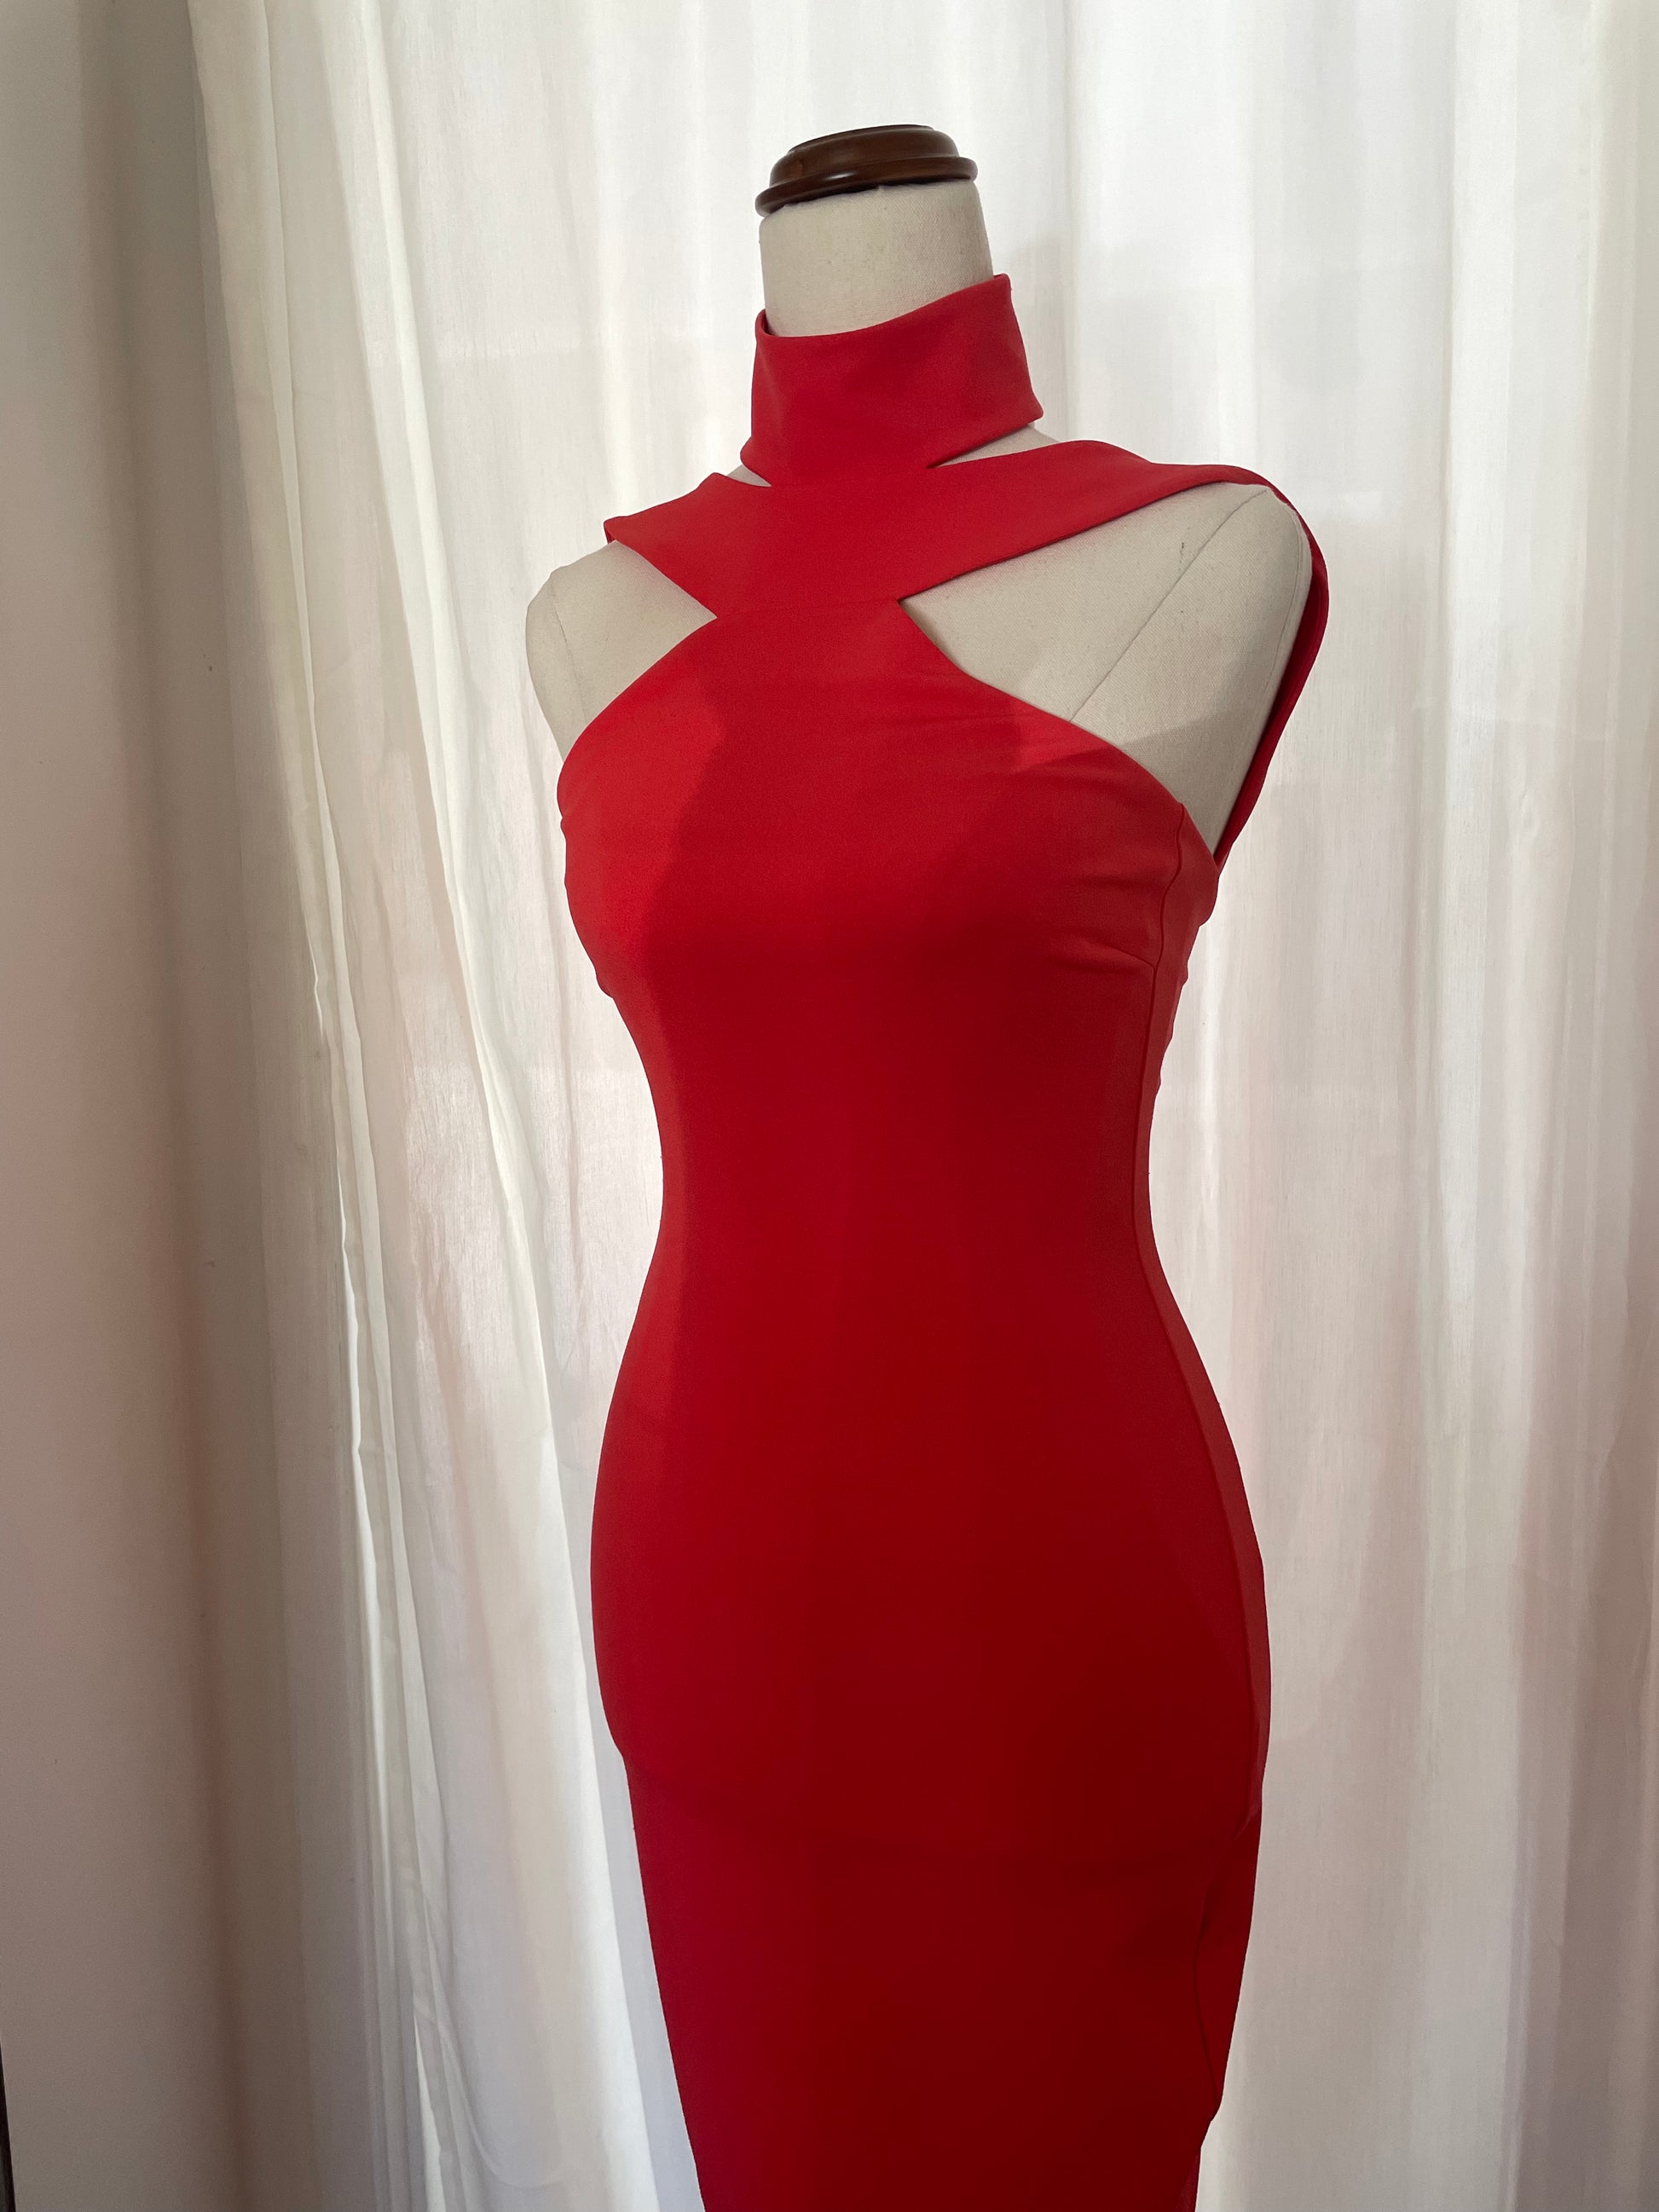 Nookie Celestial Midi Dress. salmon pink dress high neck cut out shoulders midi length